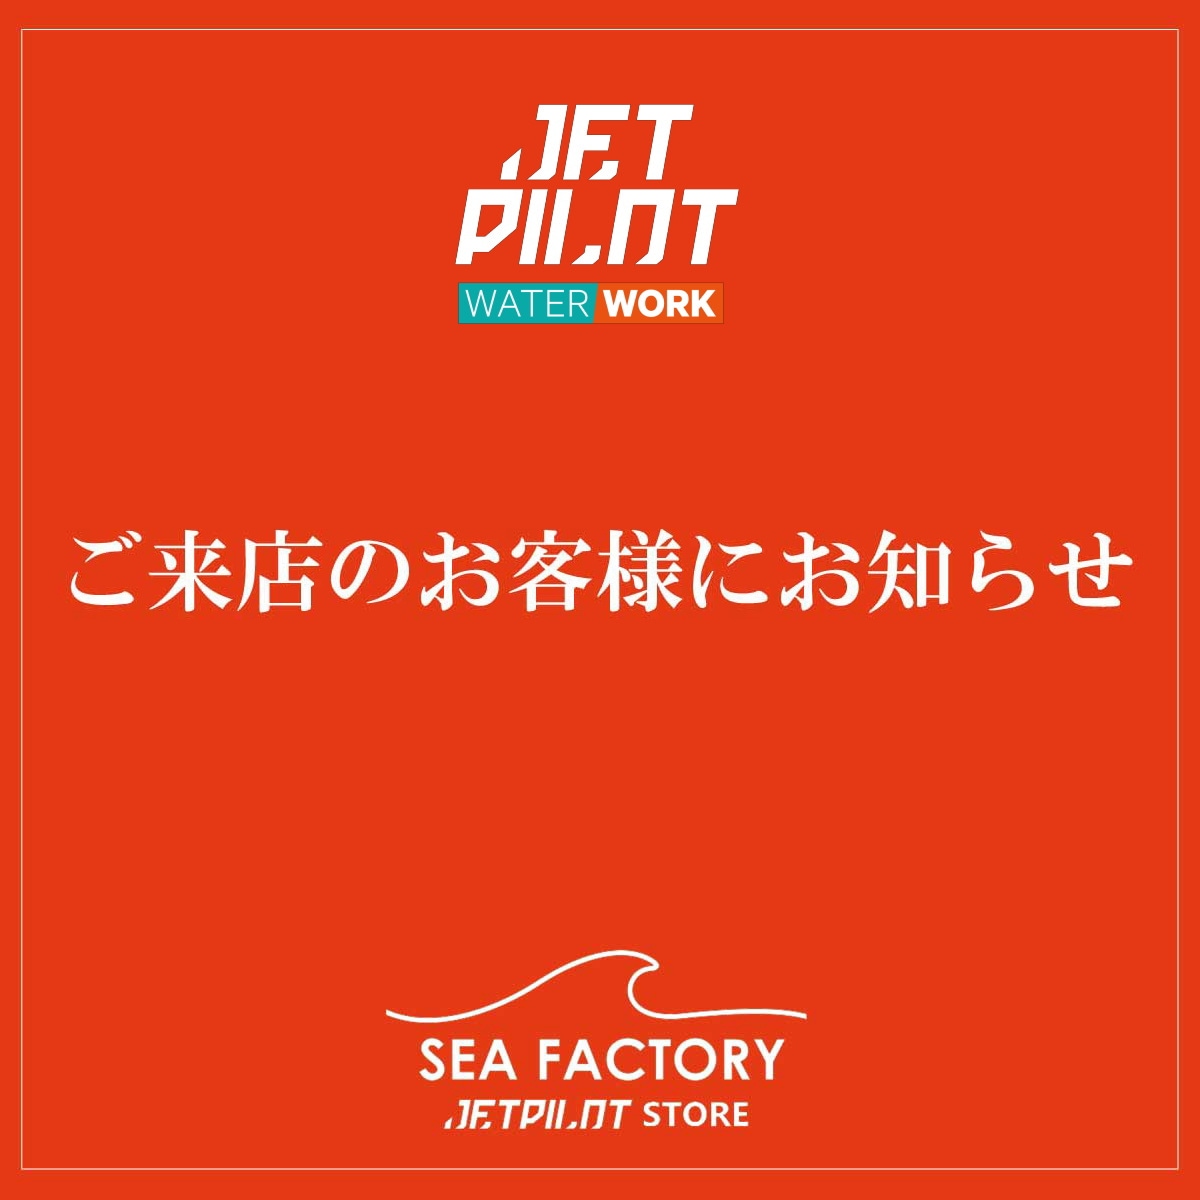 JETPILOT STORE ジェットパイロット通販｜SEA FACTORY